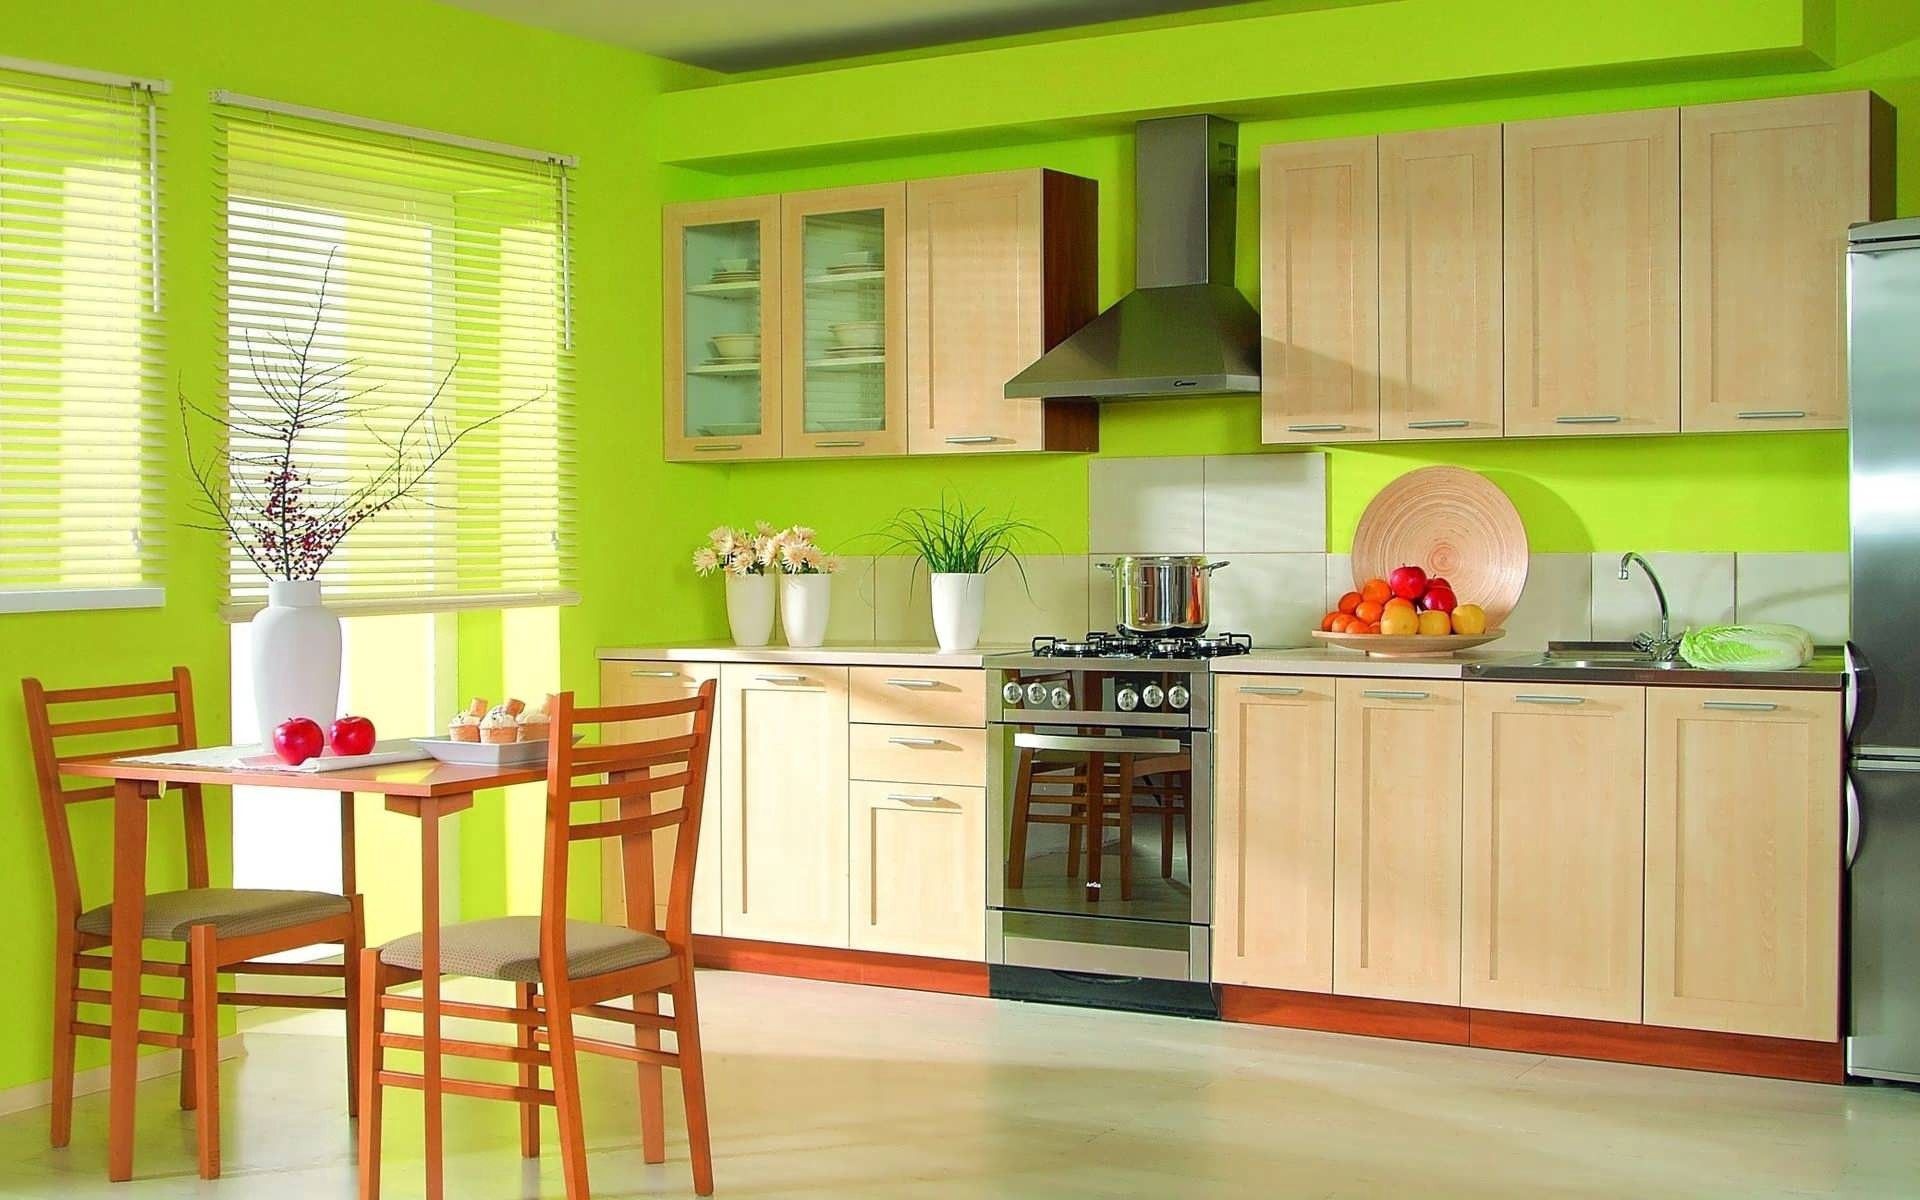 wallpapers kitchen, miscellanea, miscellaneous, style, furniture, coziness, comfort